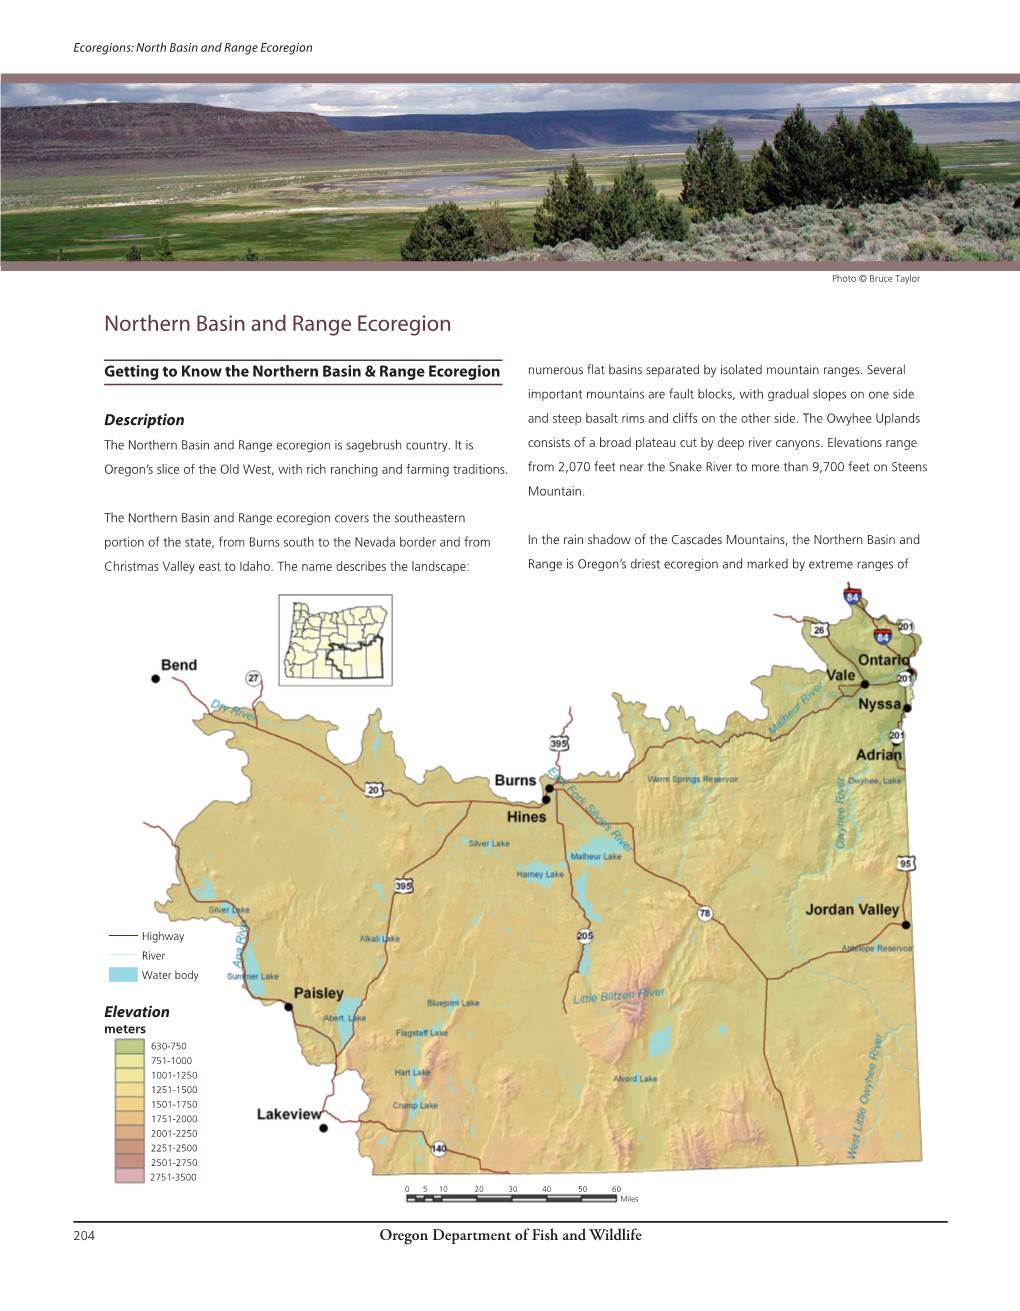 Northern Basin and Range Ecoregion